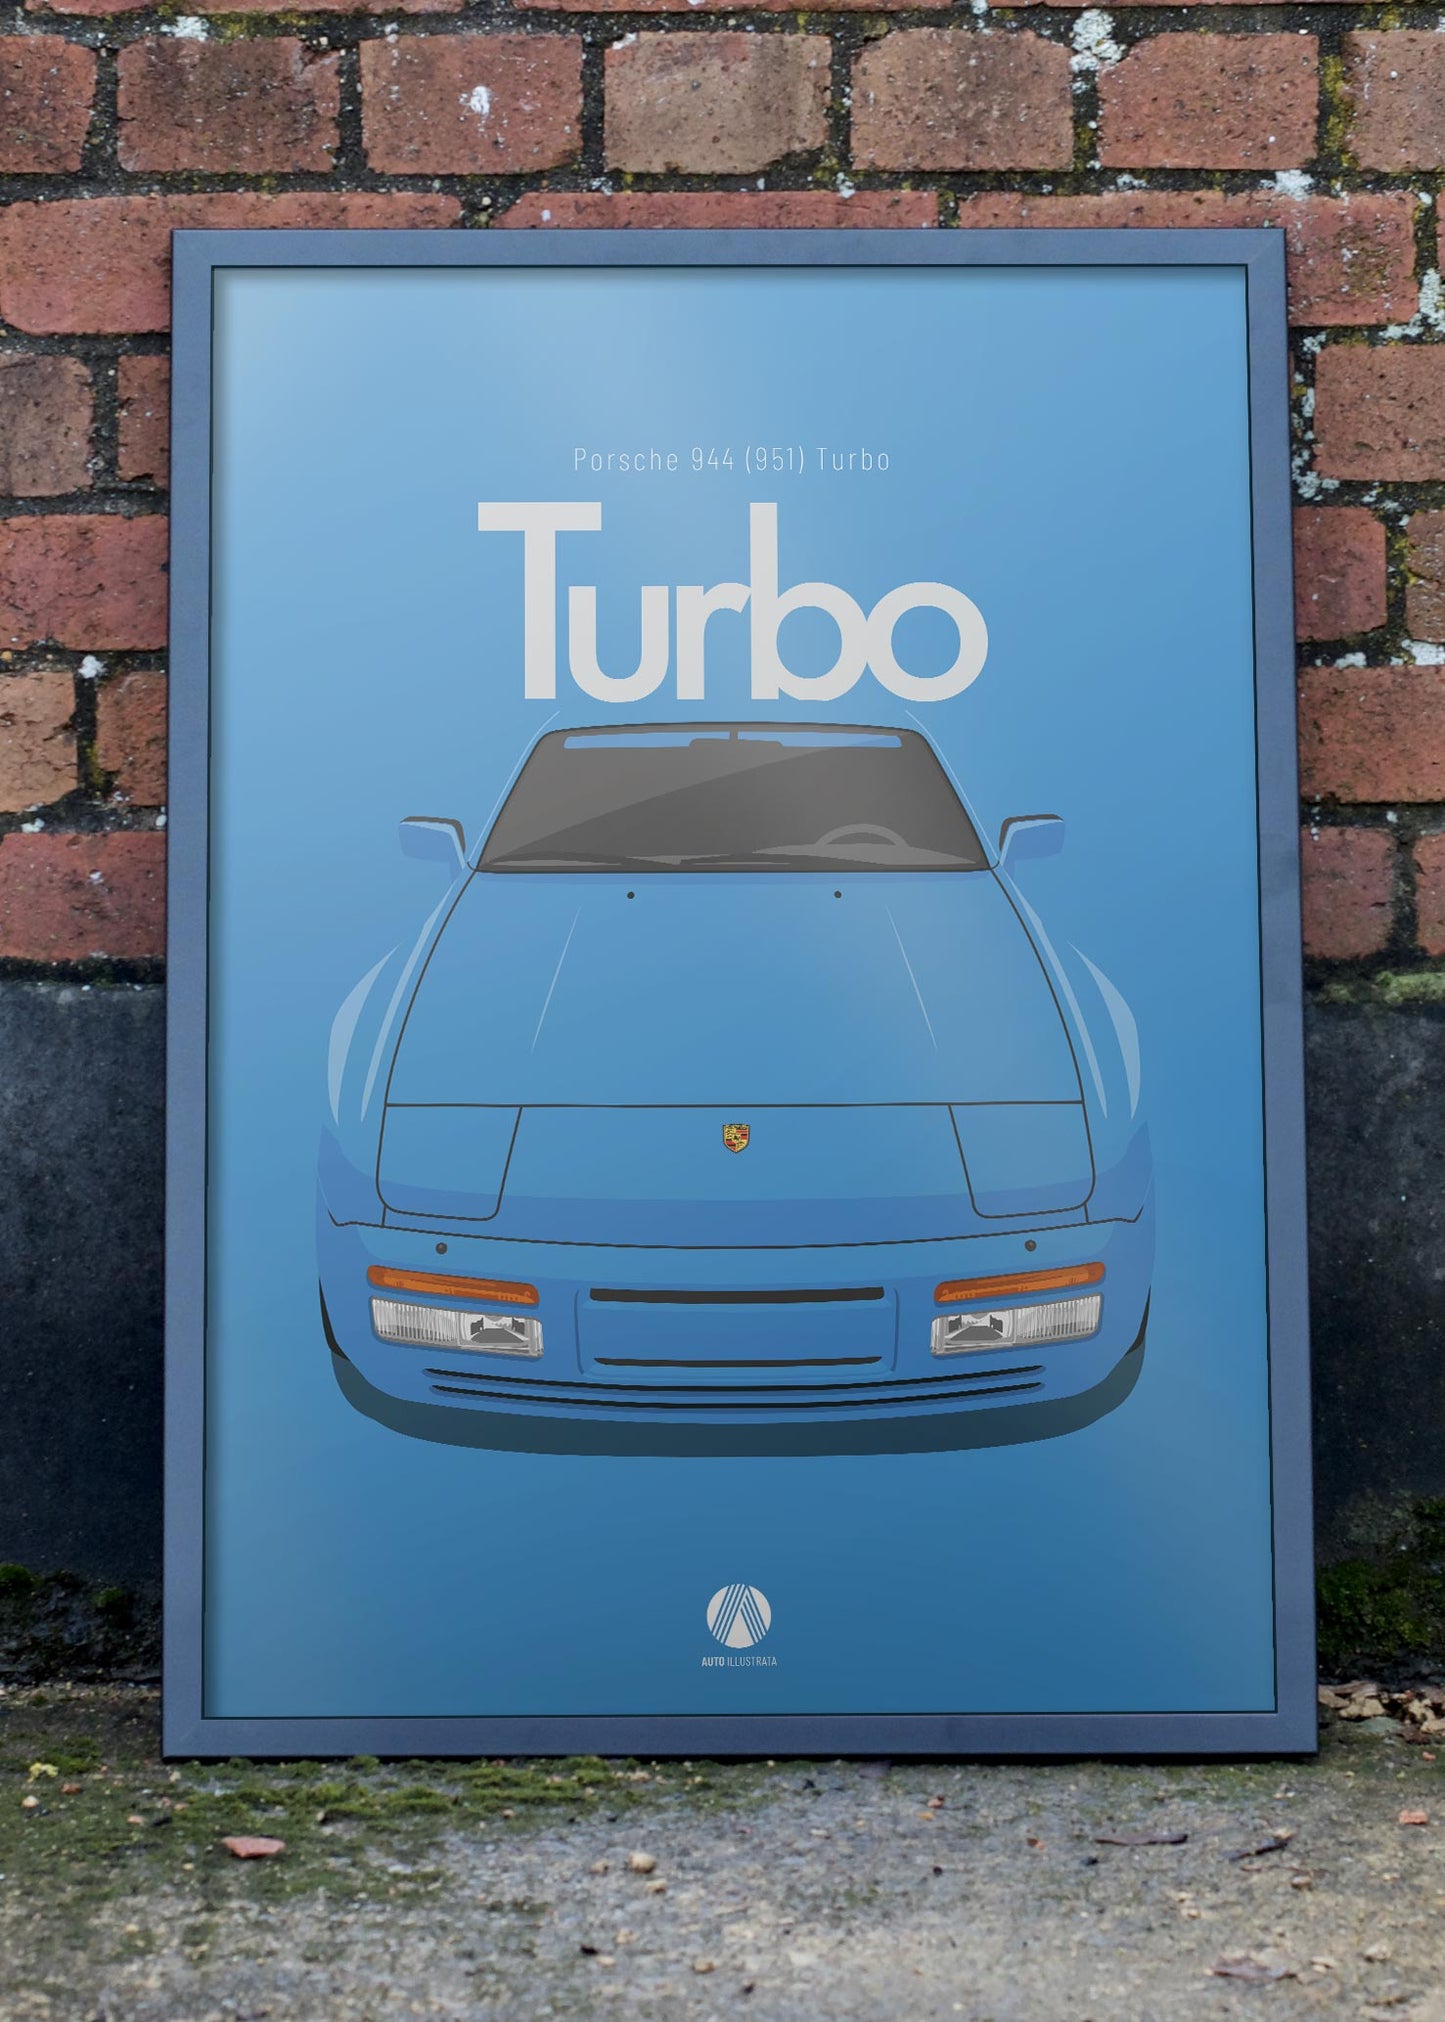 1986 Porsche 944 (951) Turbo - LM5L Tahoe-Blau - poster print